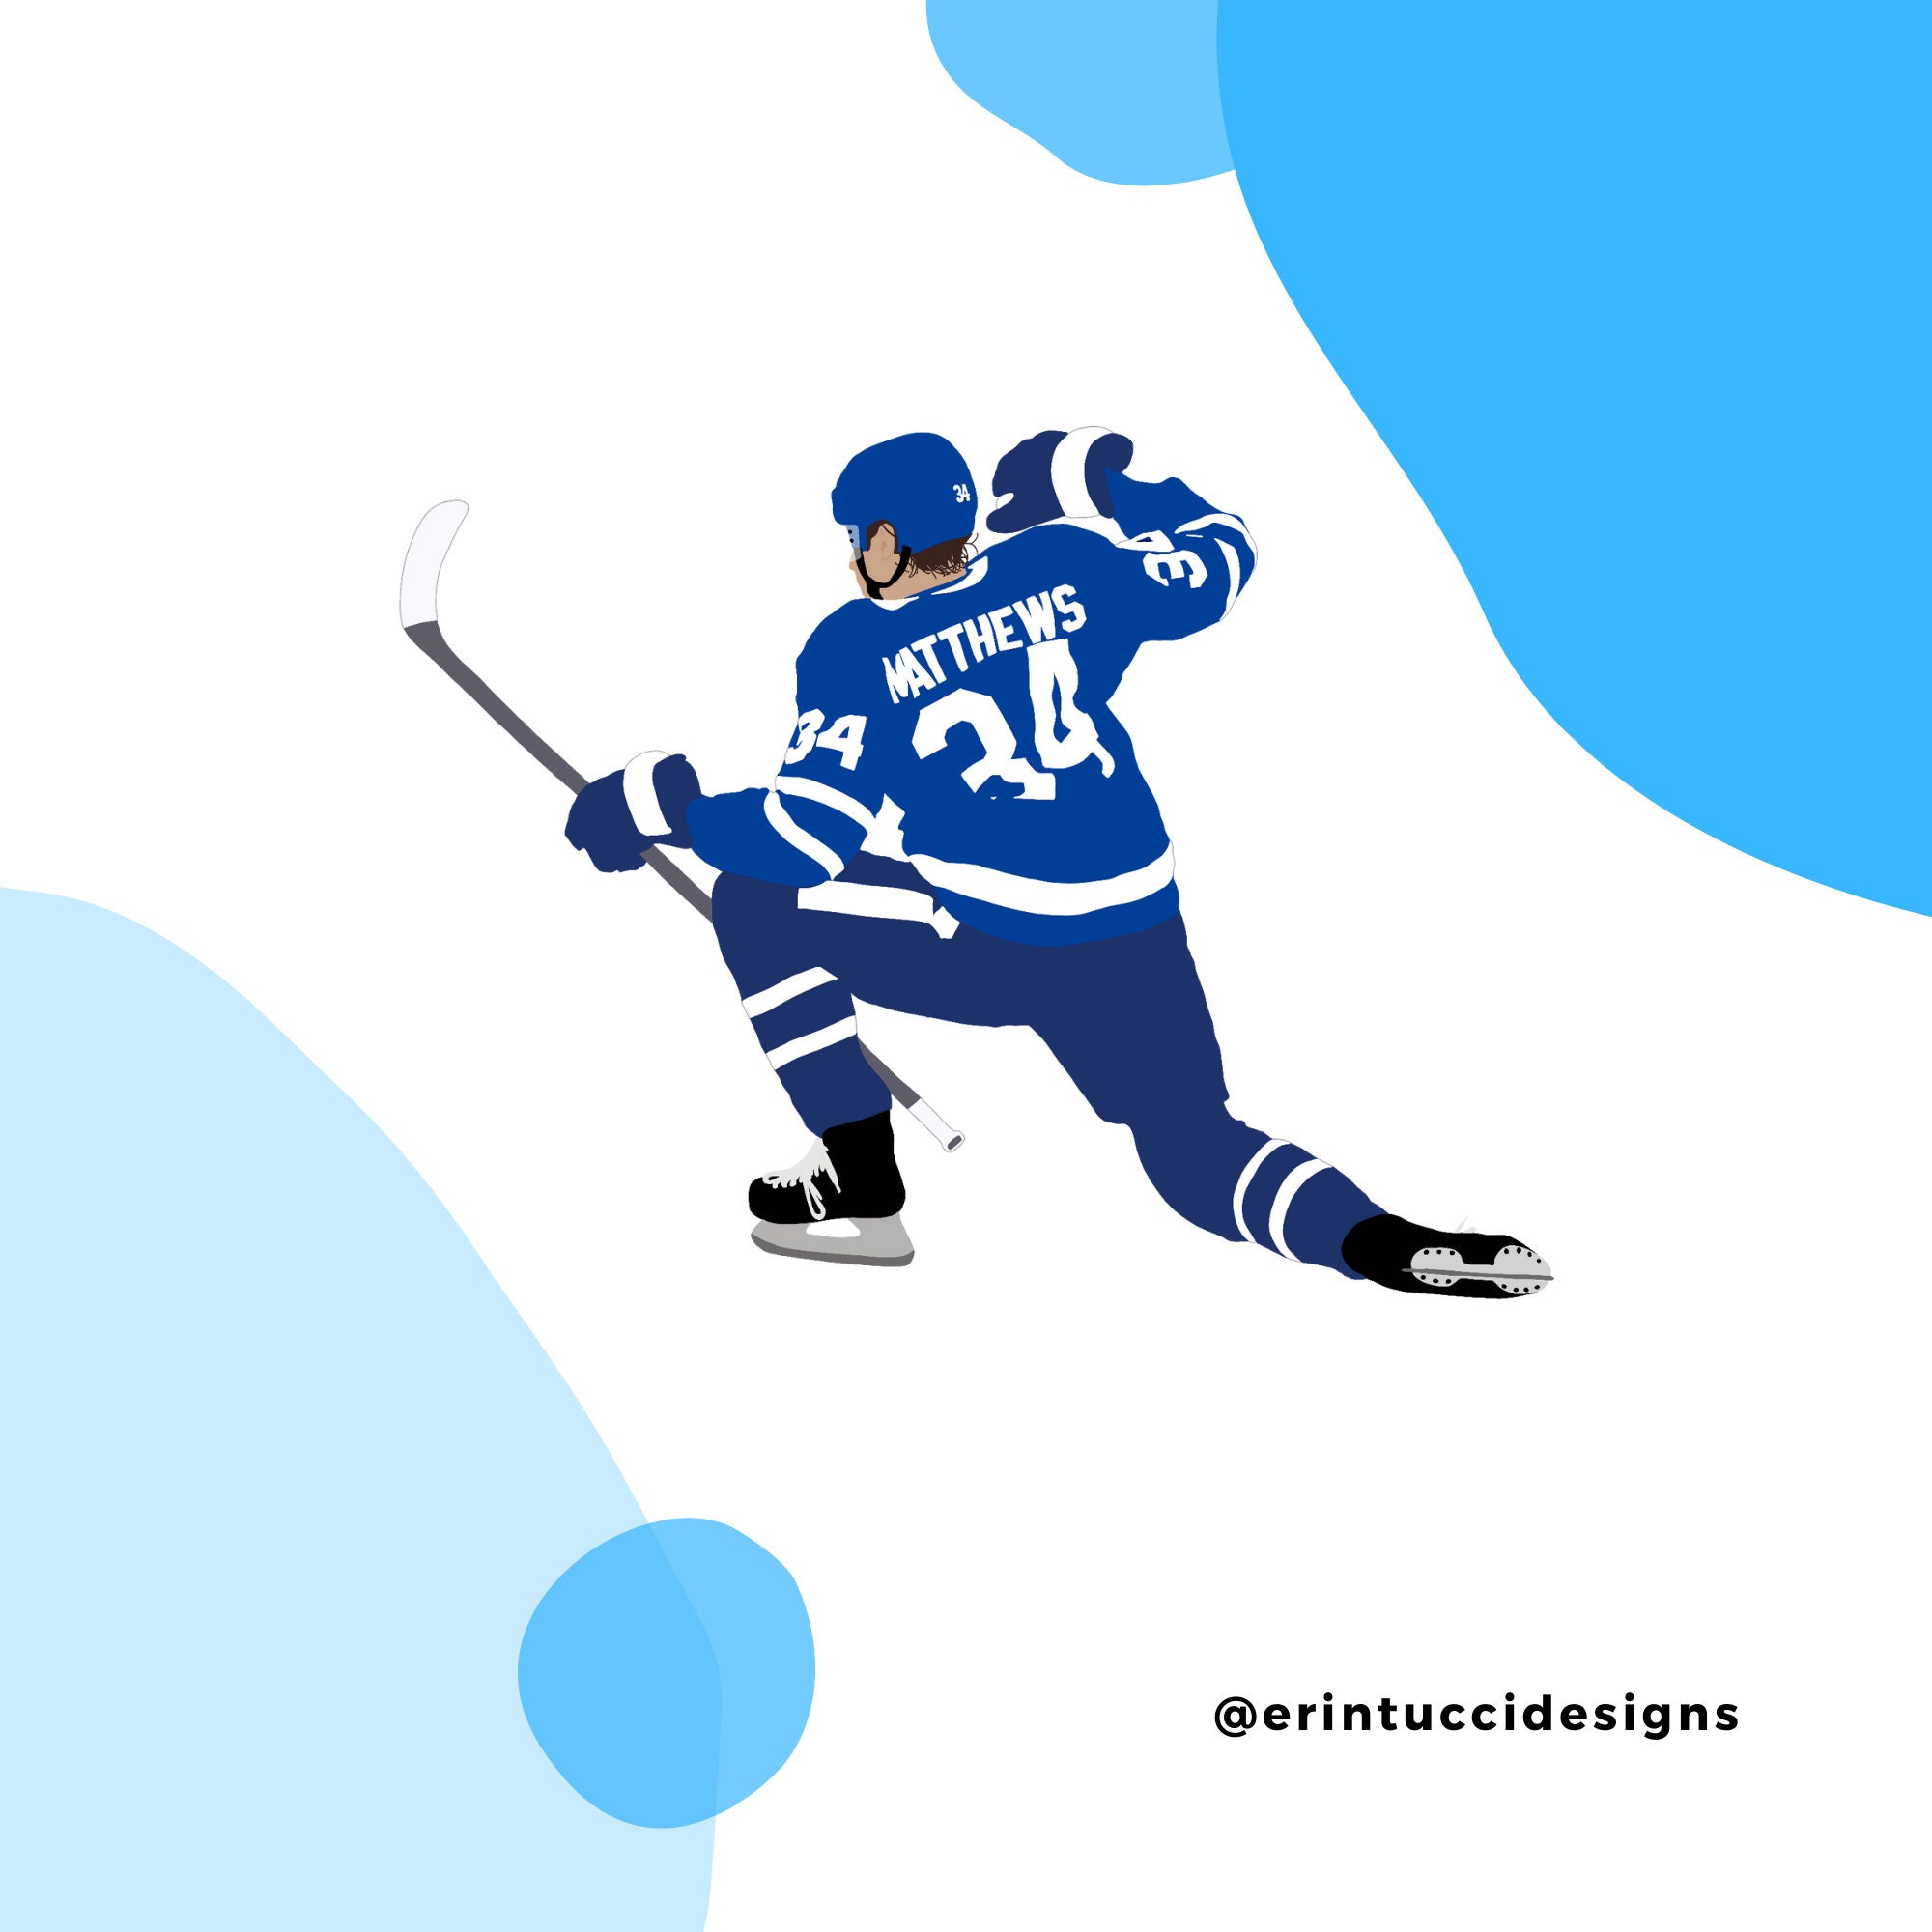 Auston Matthews Toronto Maple Leafs 35.75'' x 24.25'' Hanging Framed Player  History Poster